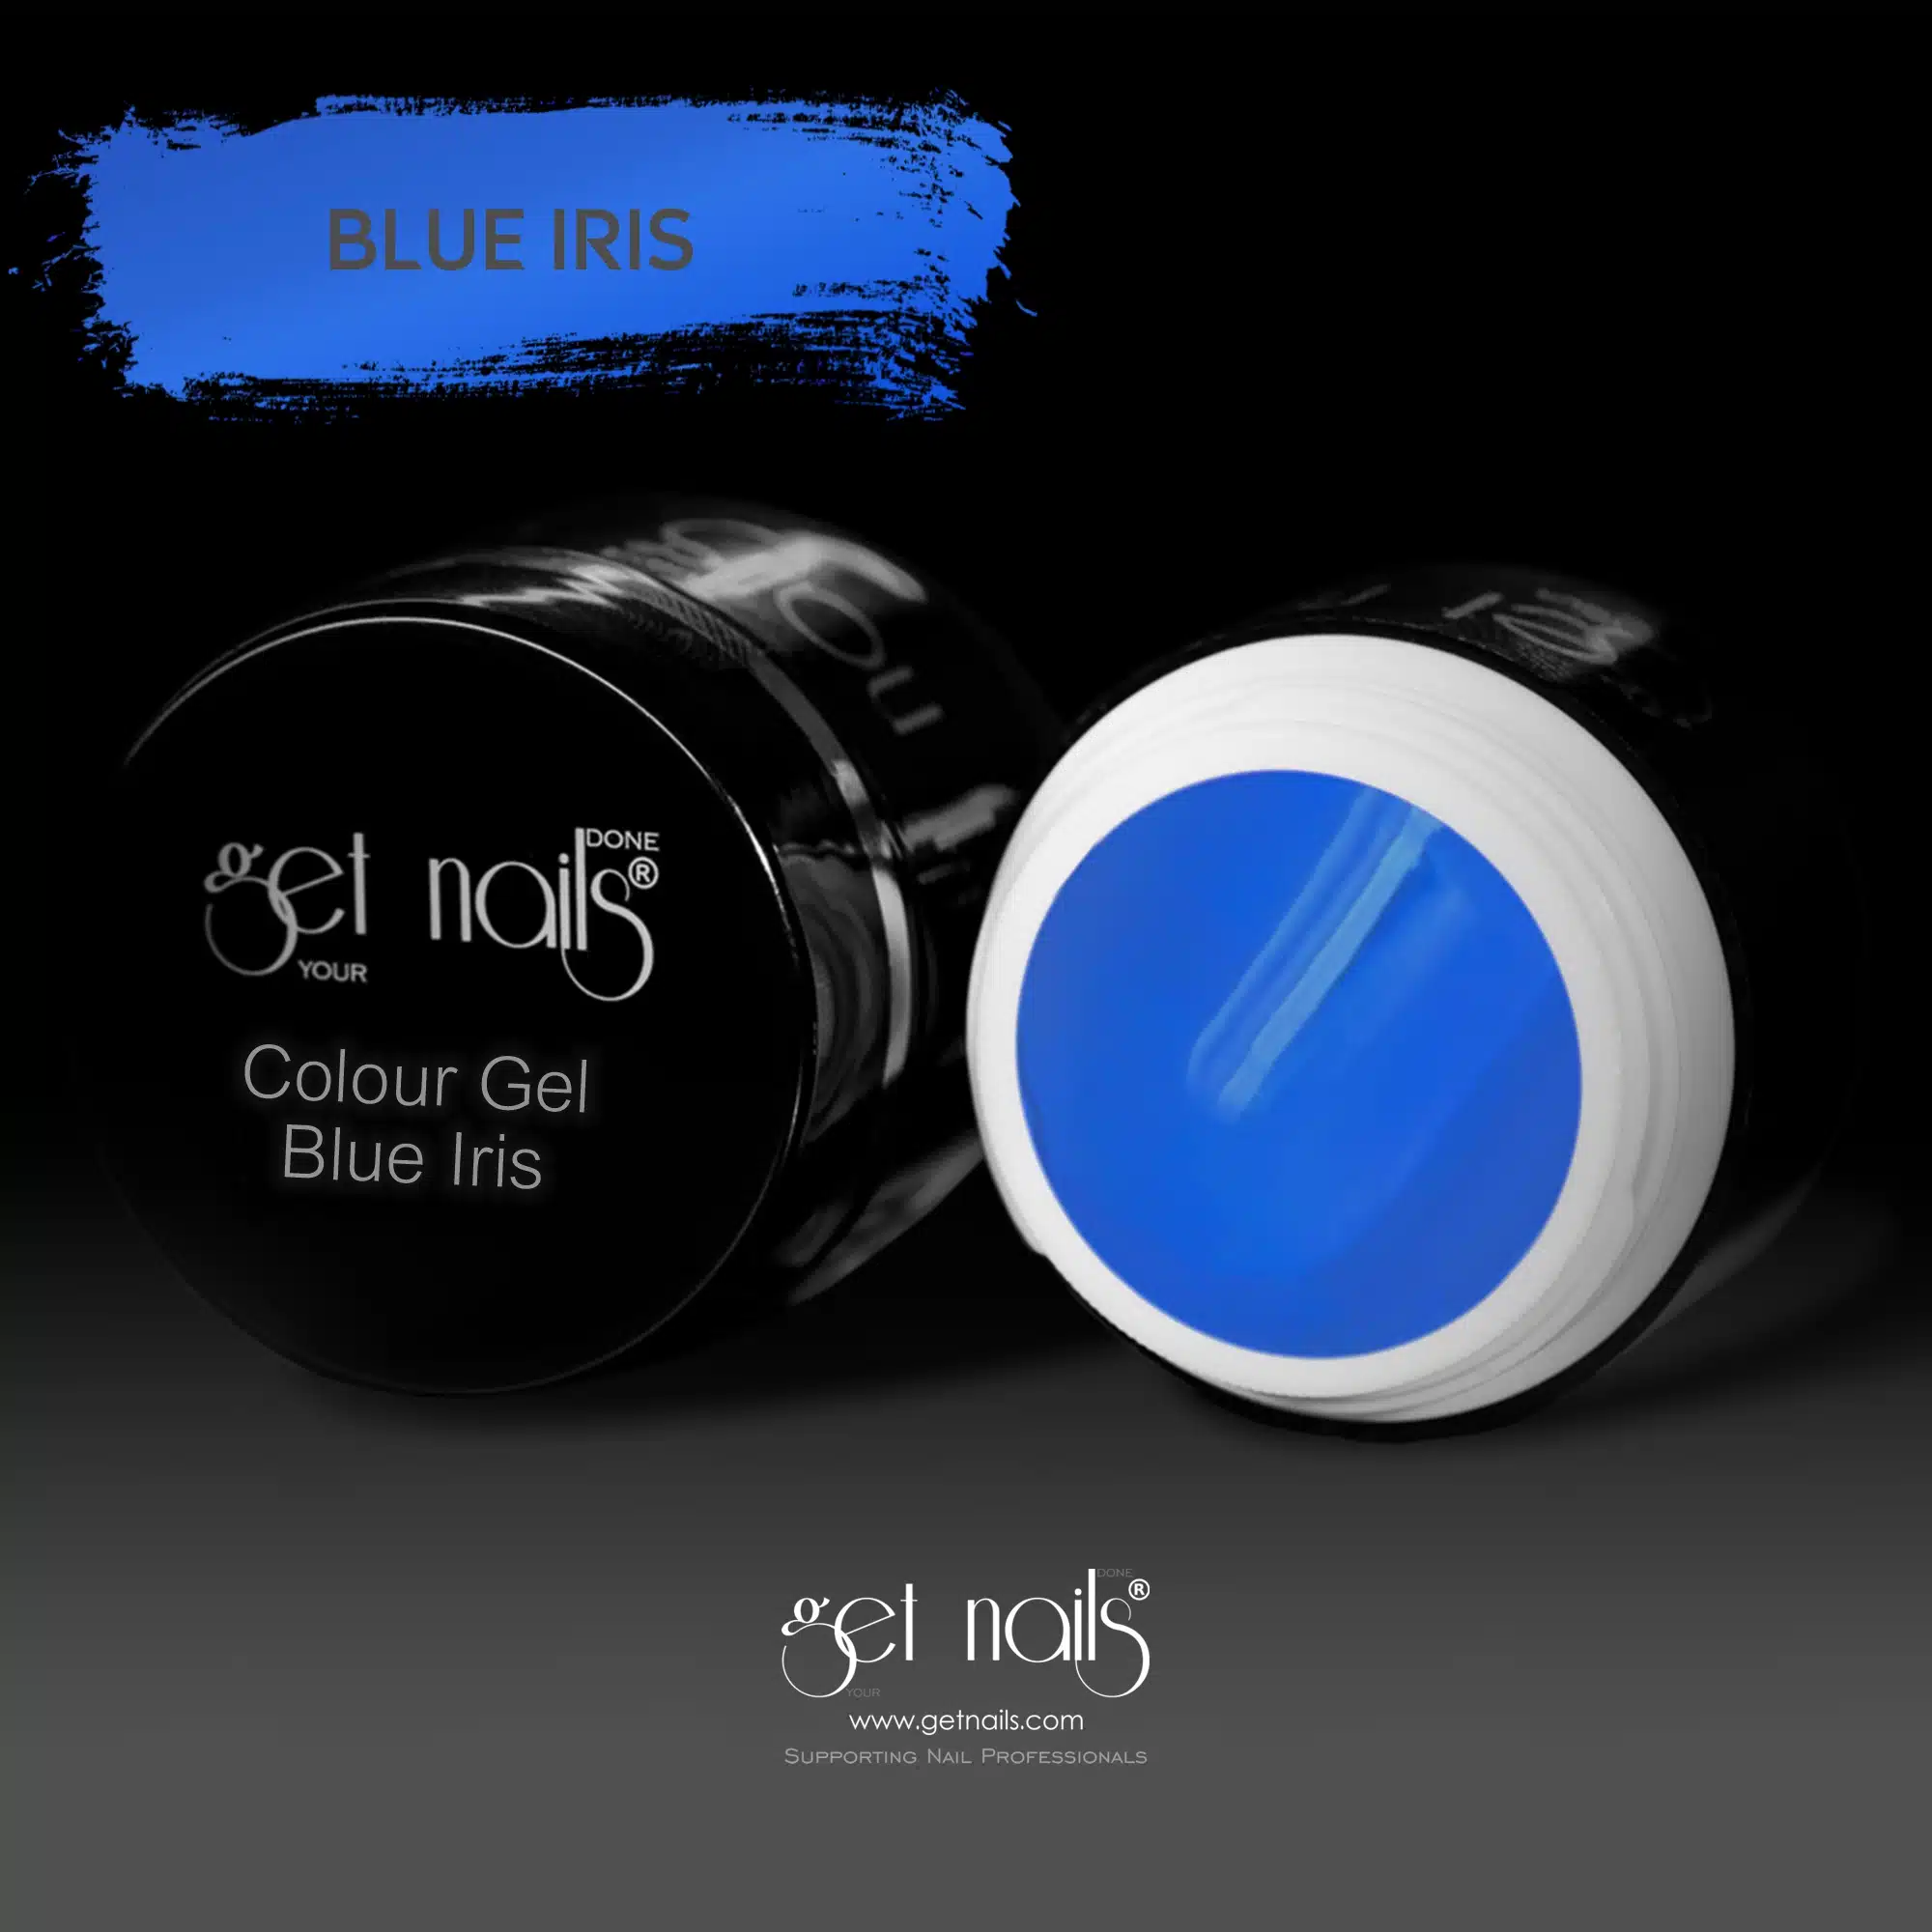 Get Nails Austria - Gel colorato Blue Iris 5g